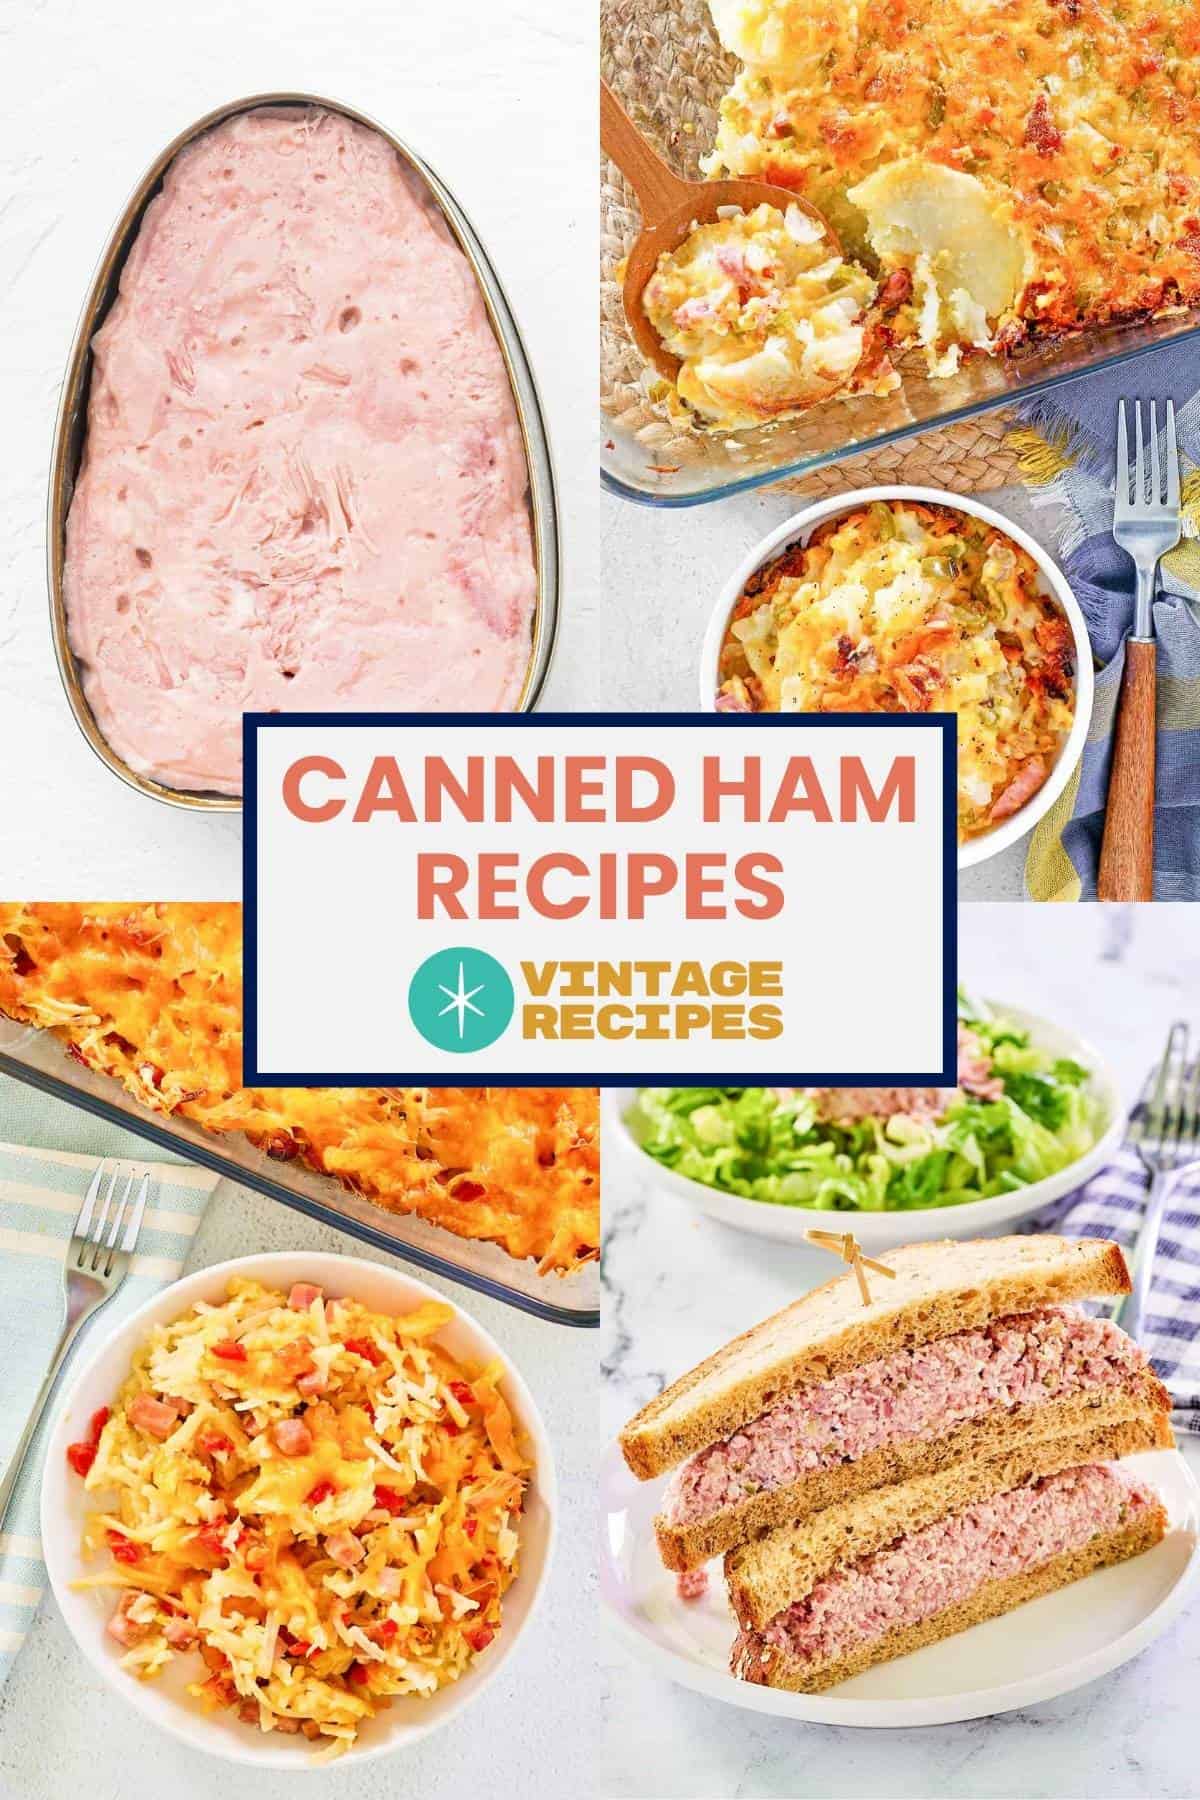 Canned ham, ham scalloped potatoes, ham hashbrown casserole, and ham salad sandwich.